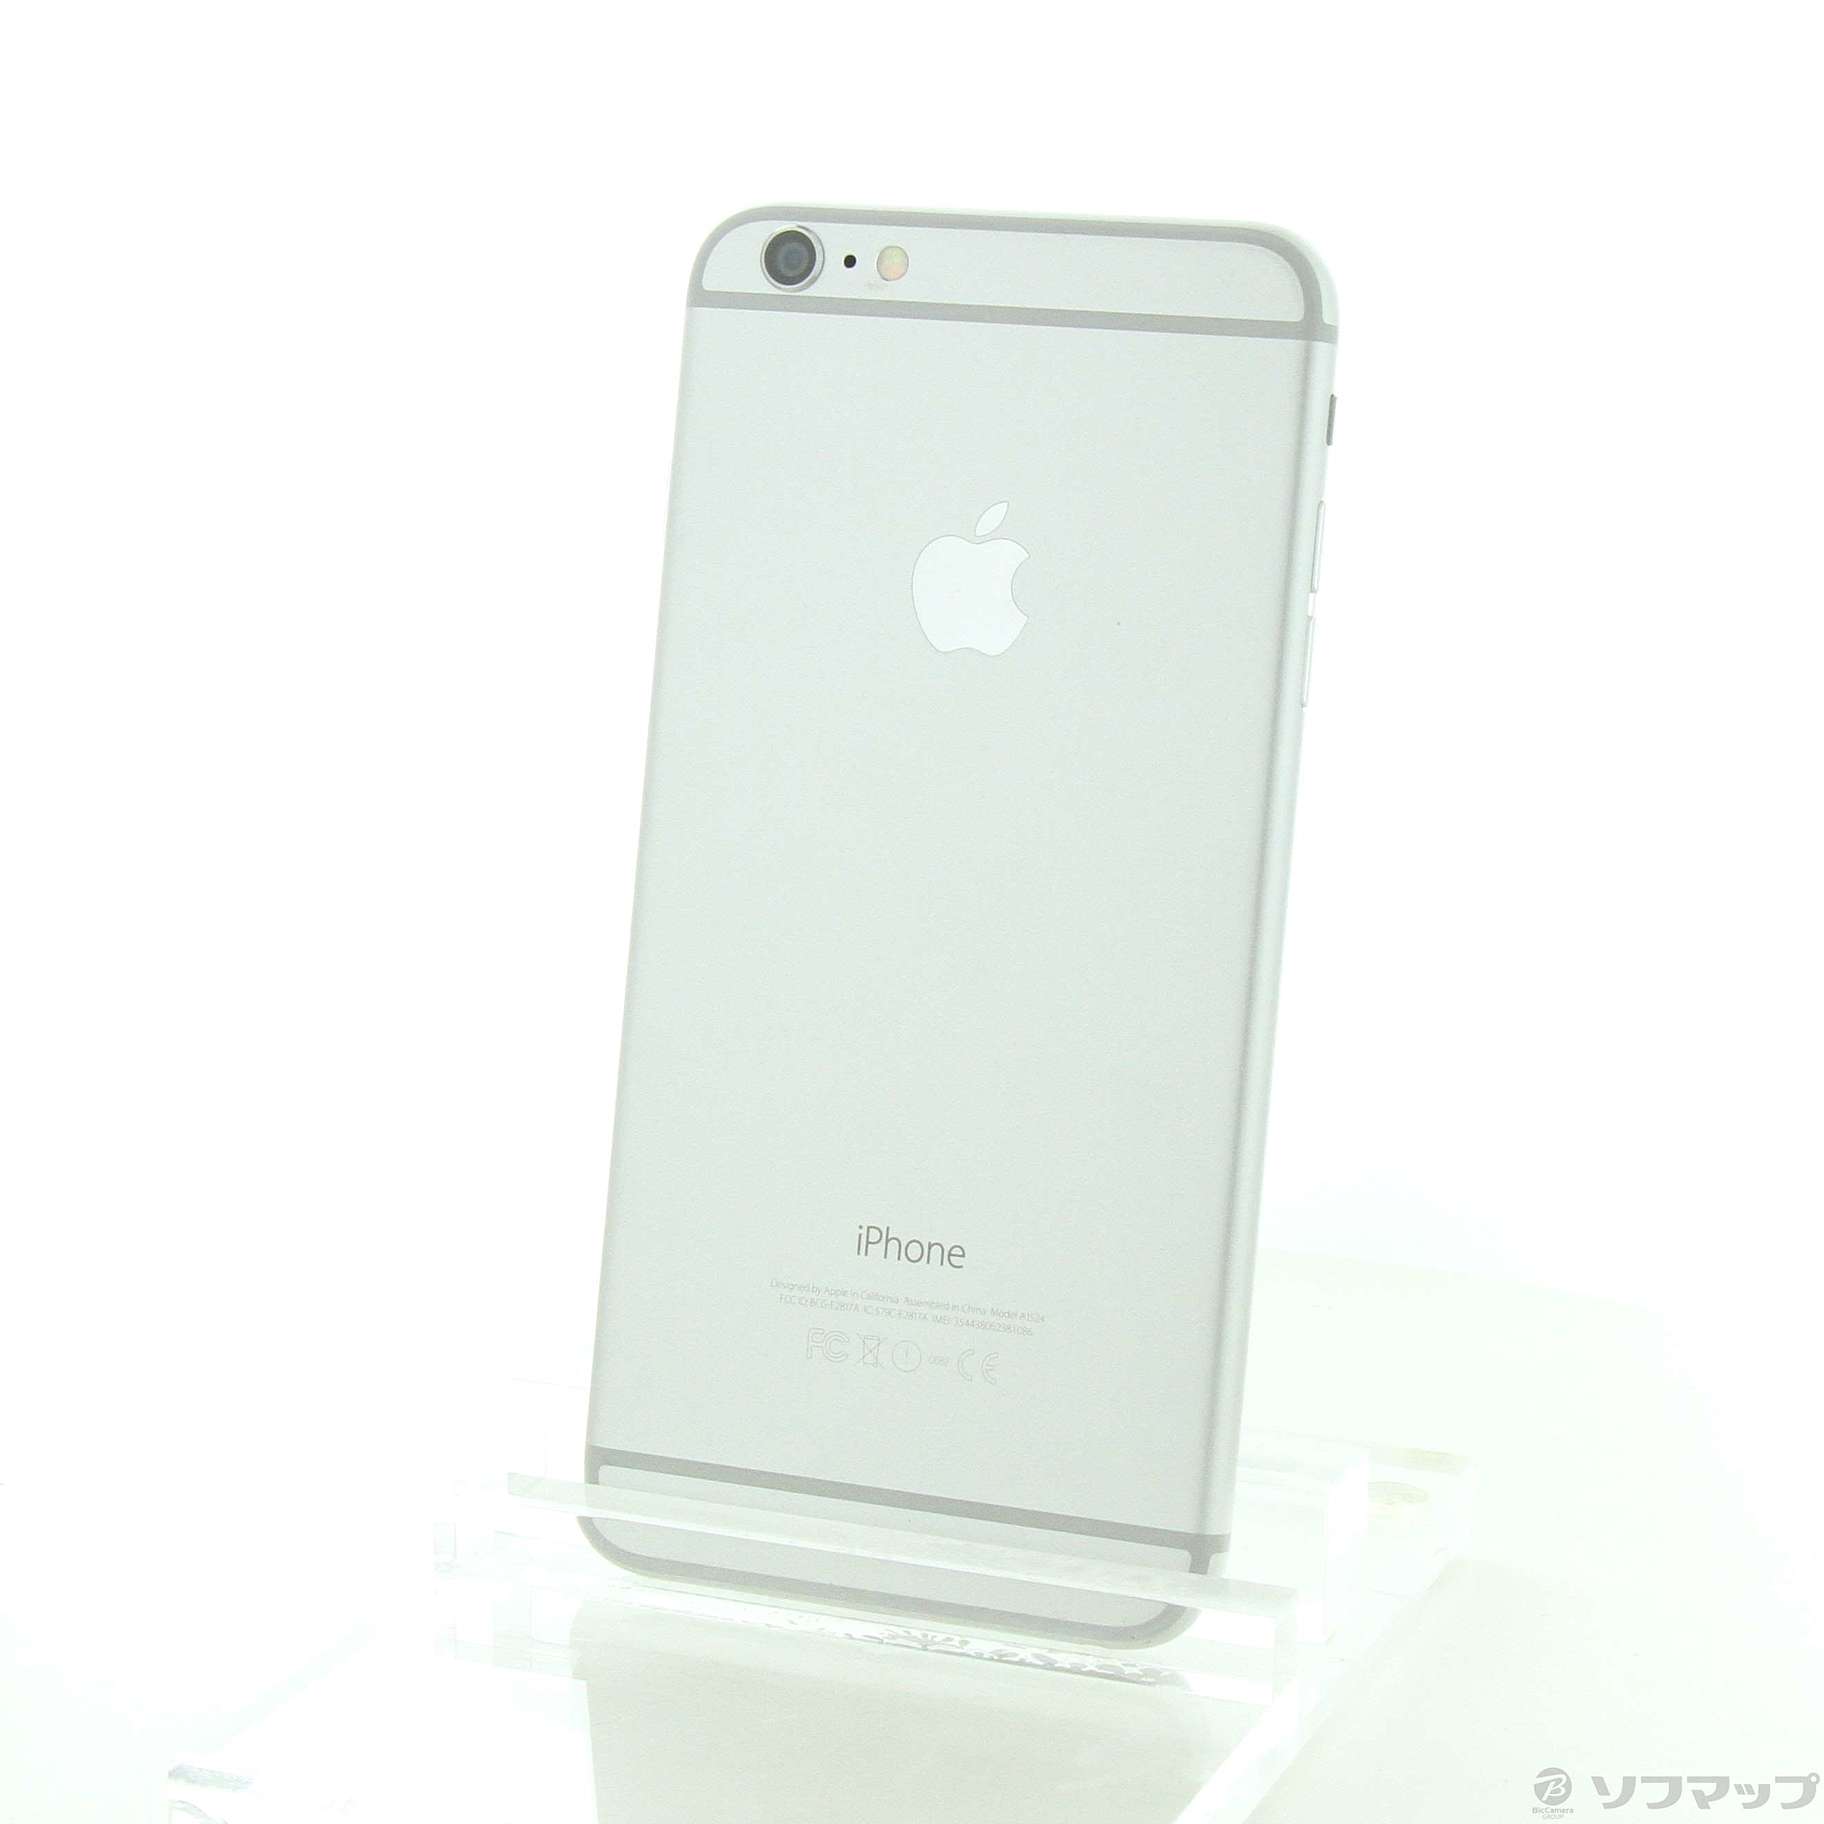 iPhone6 16gb silver